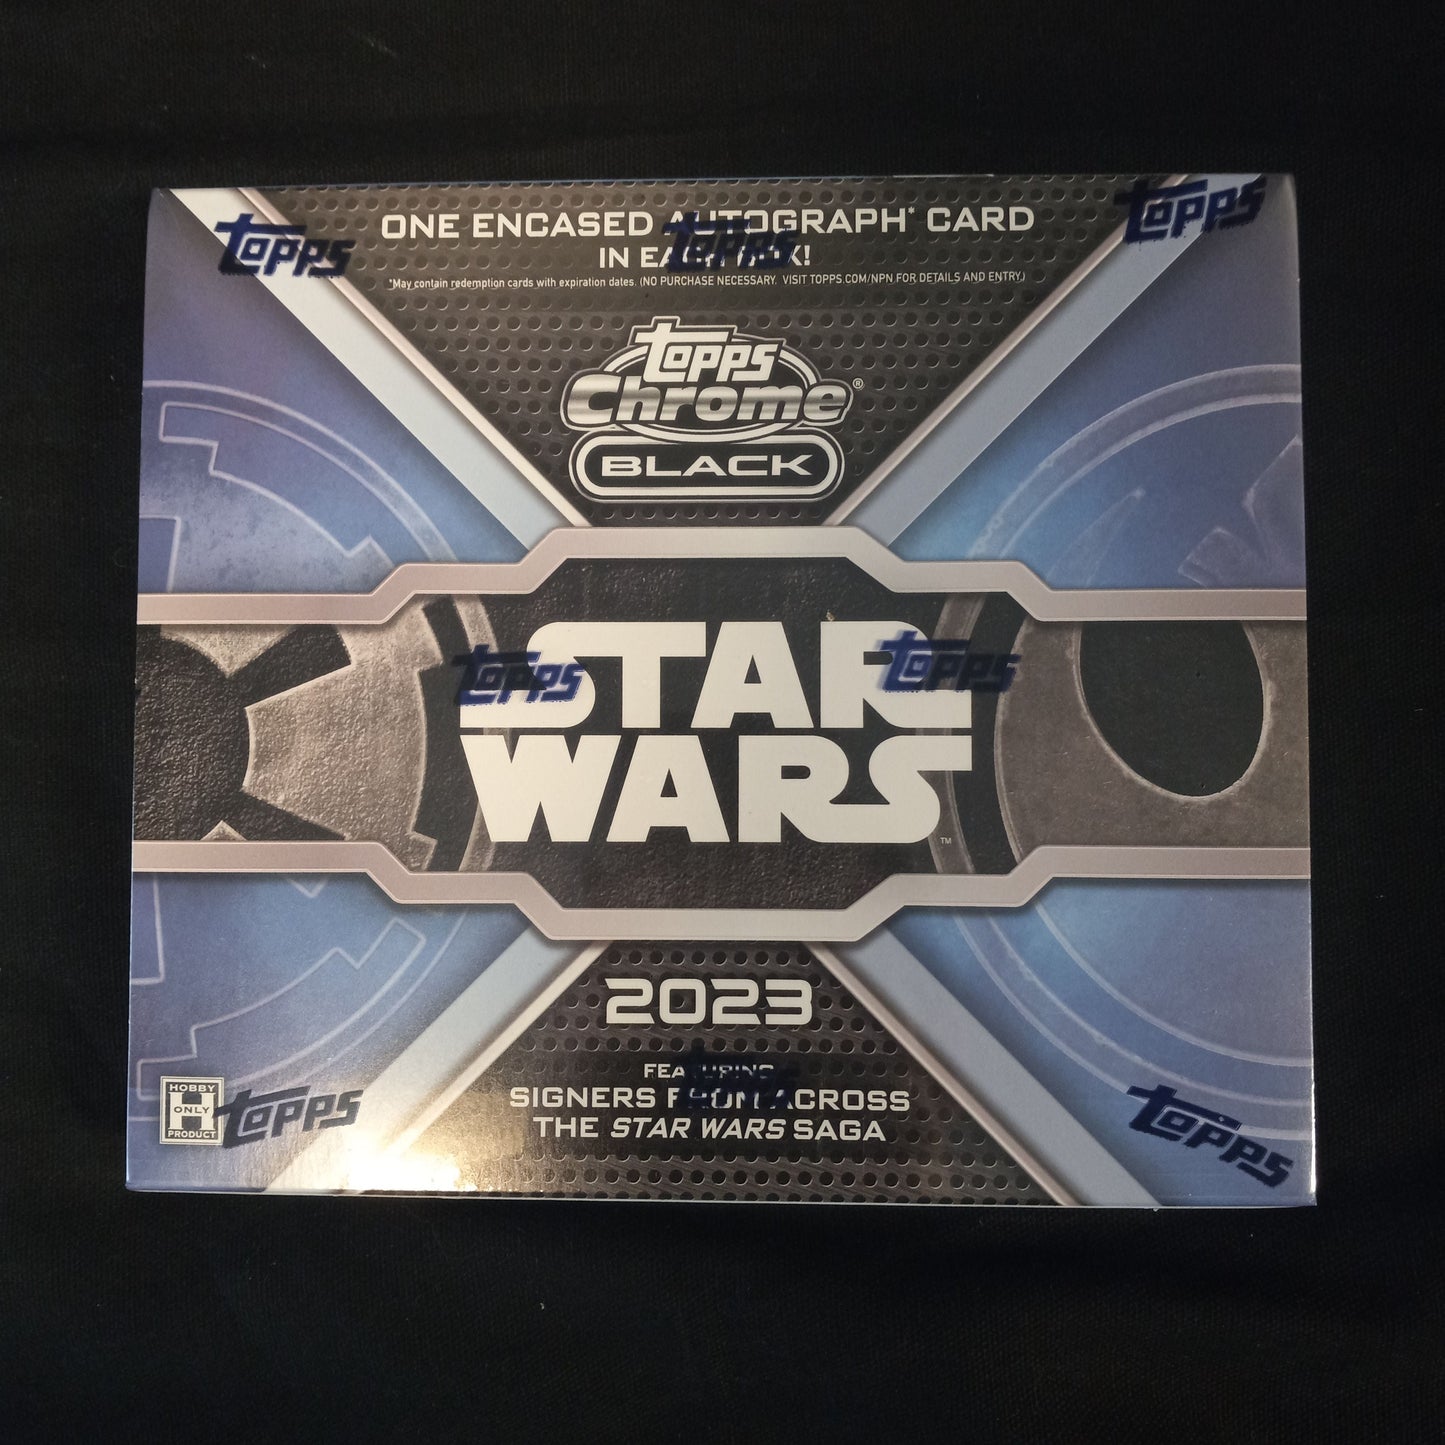 2023 Topps Star Wars Chrome Black Hobby Box Personal